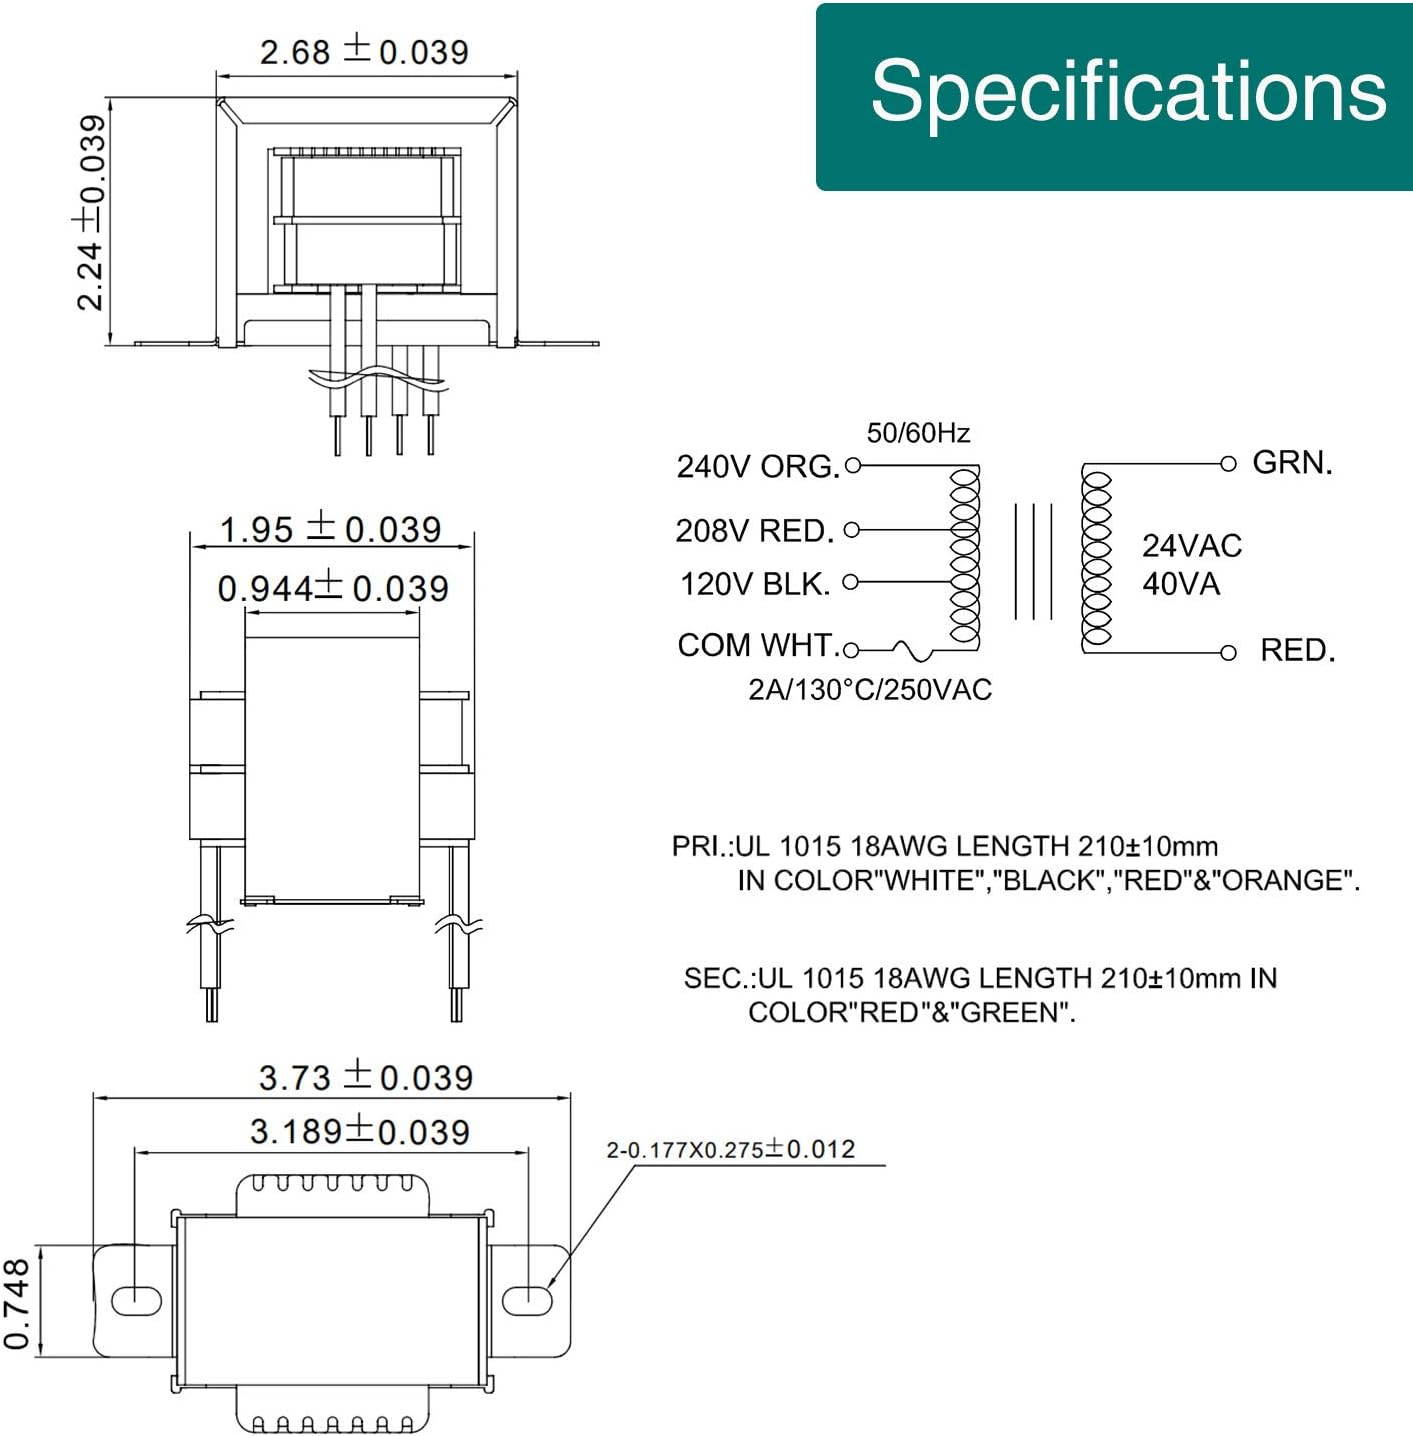 Fiada Control Transformer 40VA, Primary 120, 208, 240V Secondary 24V, HVAC Furnace Multi Tap